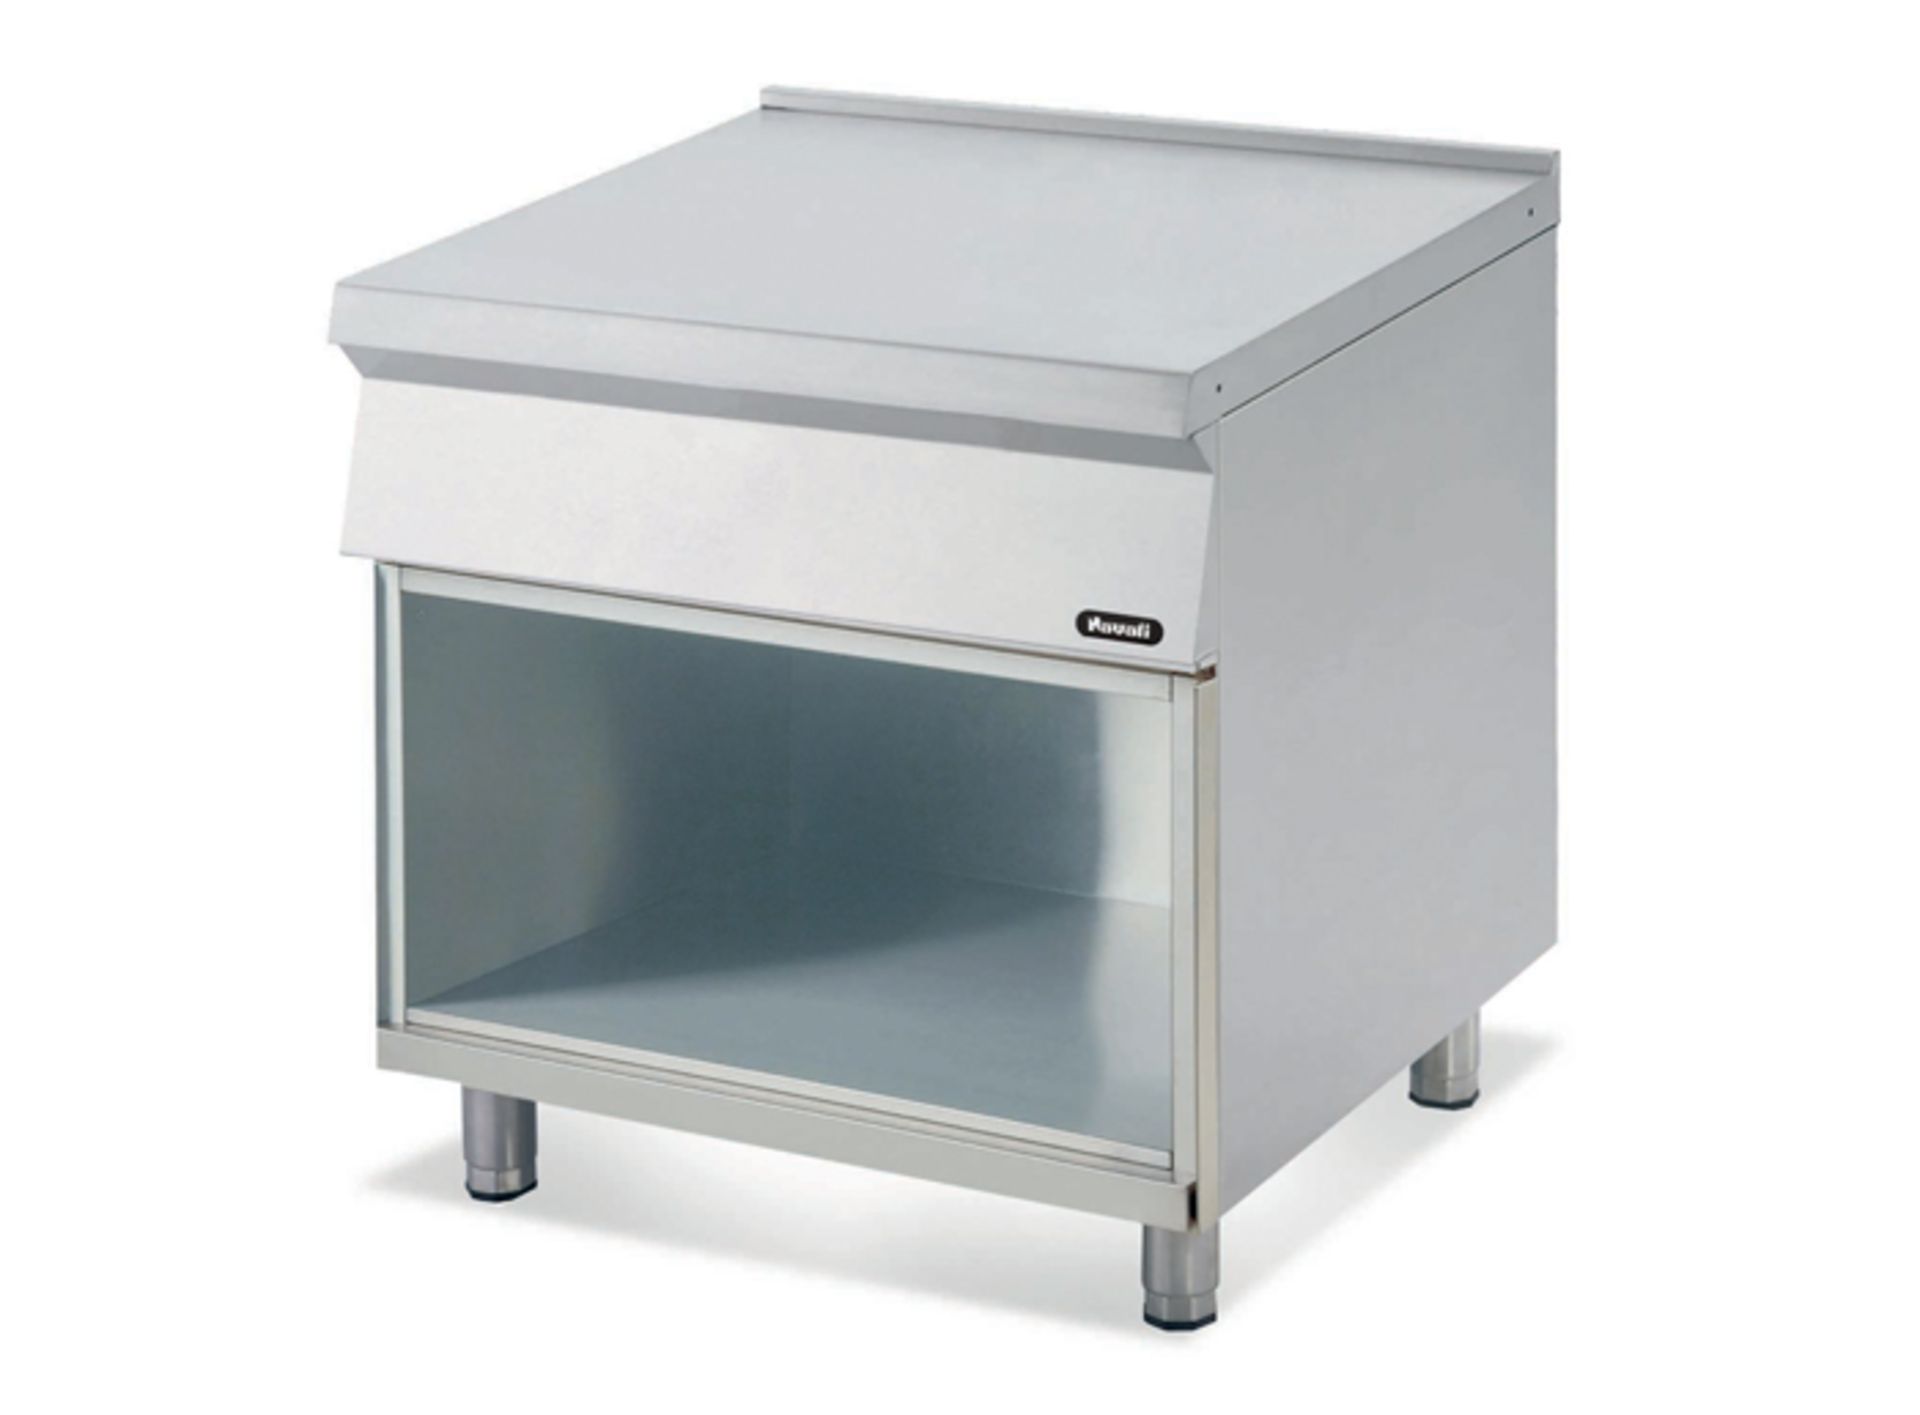 * NNWC 6-75 MR Nayati Meritus Preparation Table with Open Cabinet Beneath (600 x 750 x 850/880mm) (